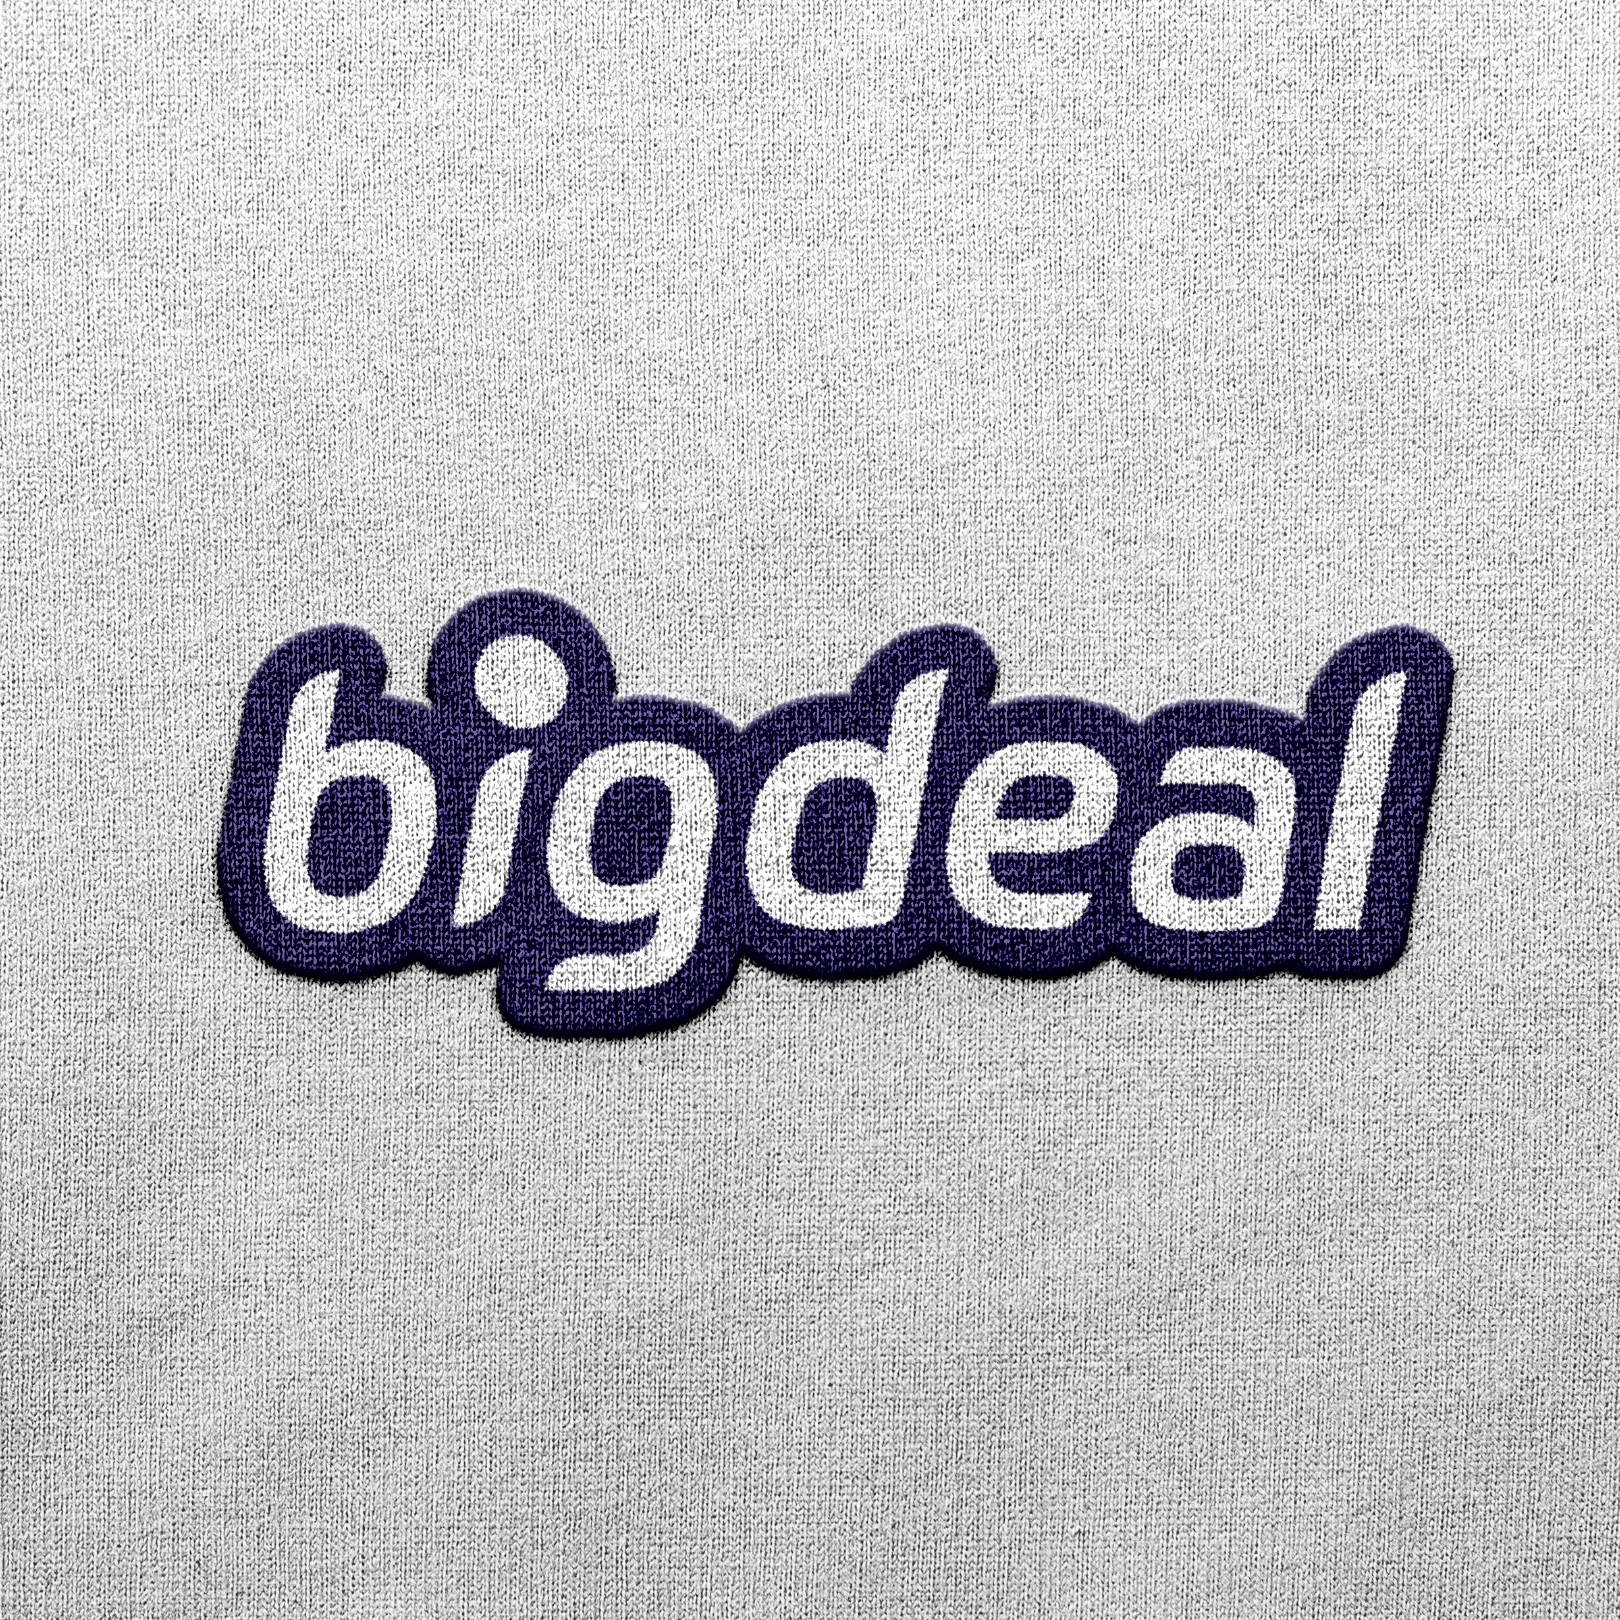 Designing a logo for BigDeal